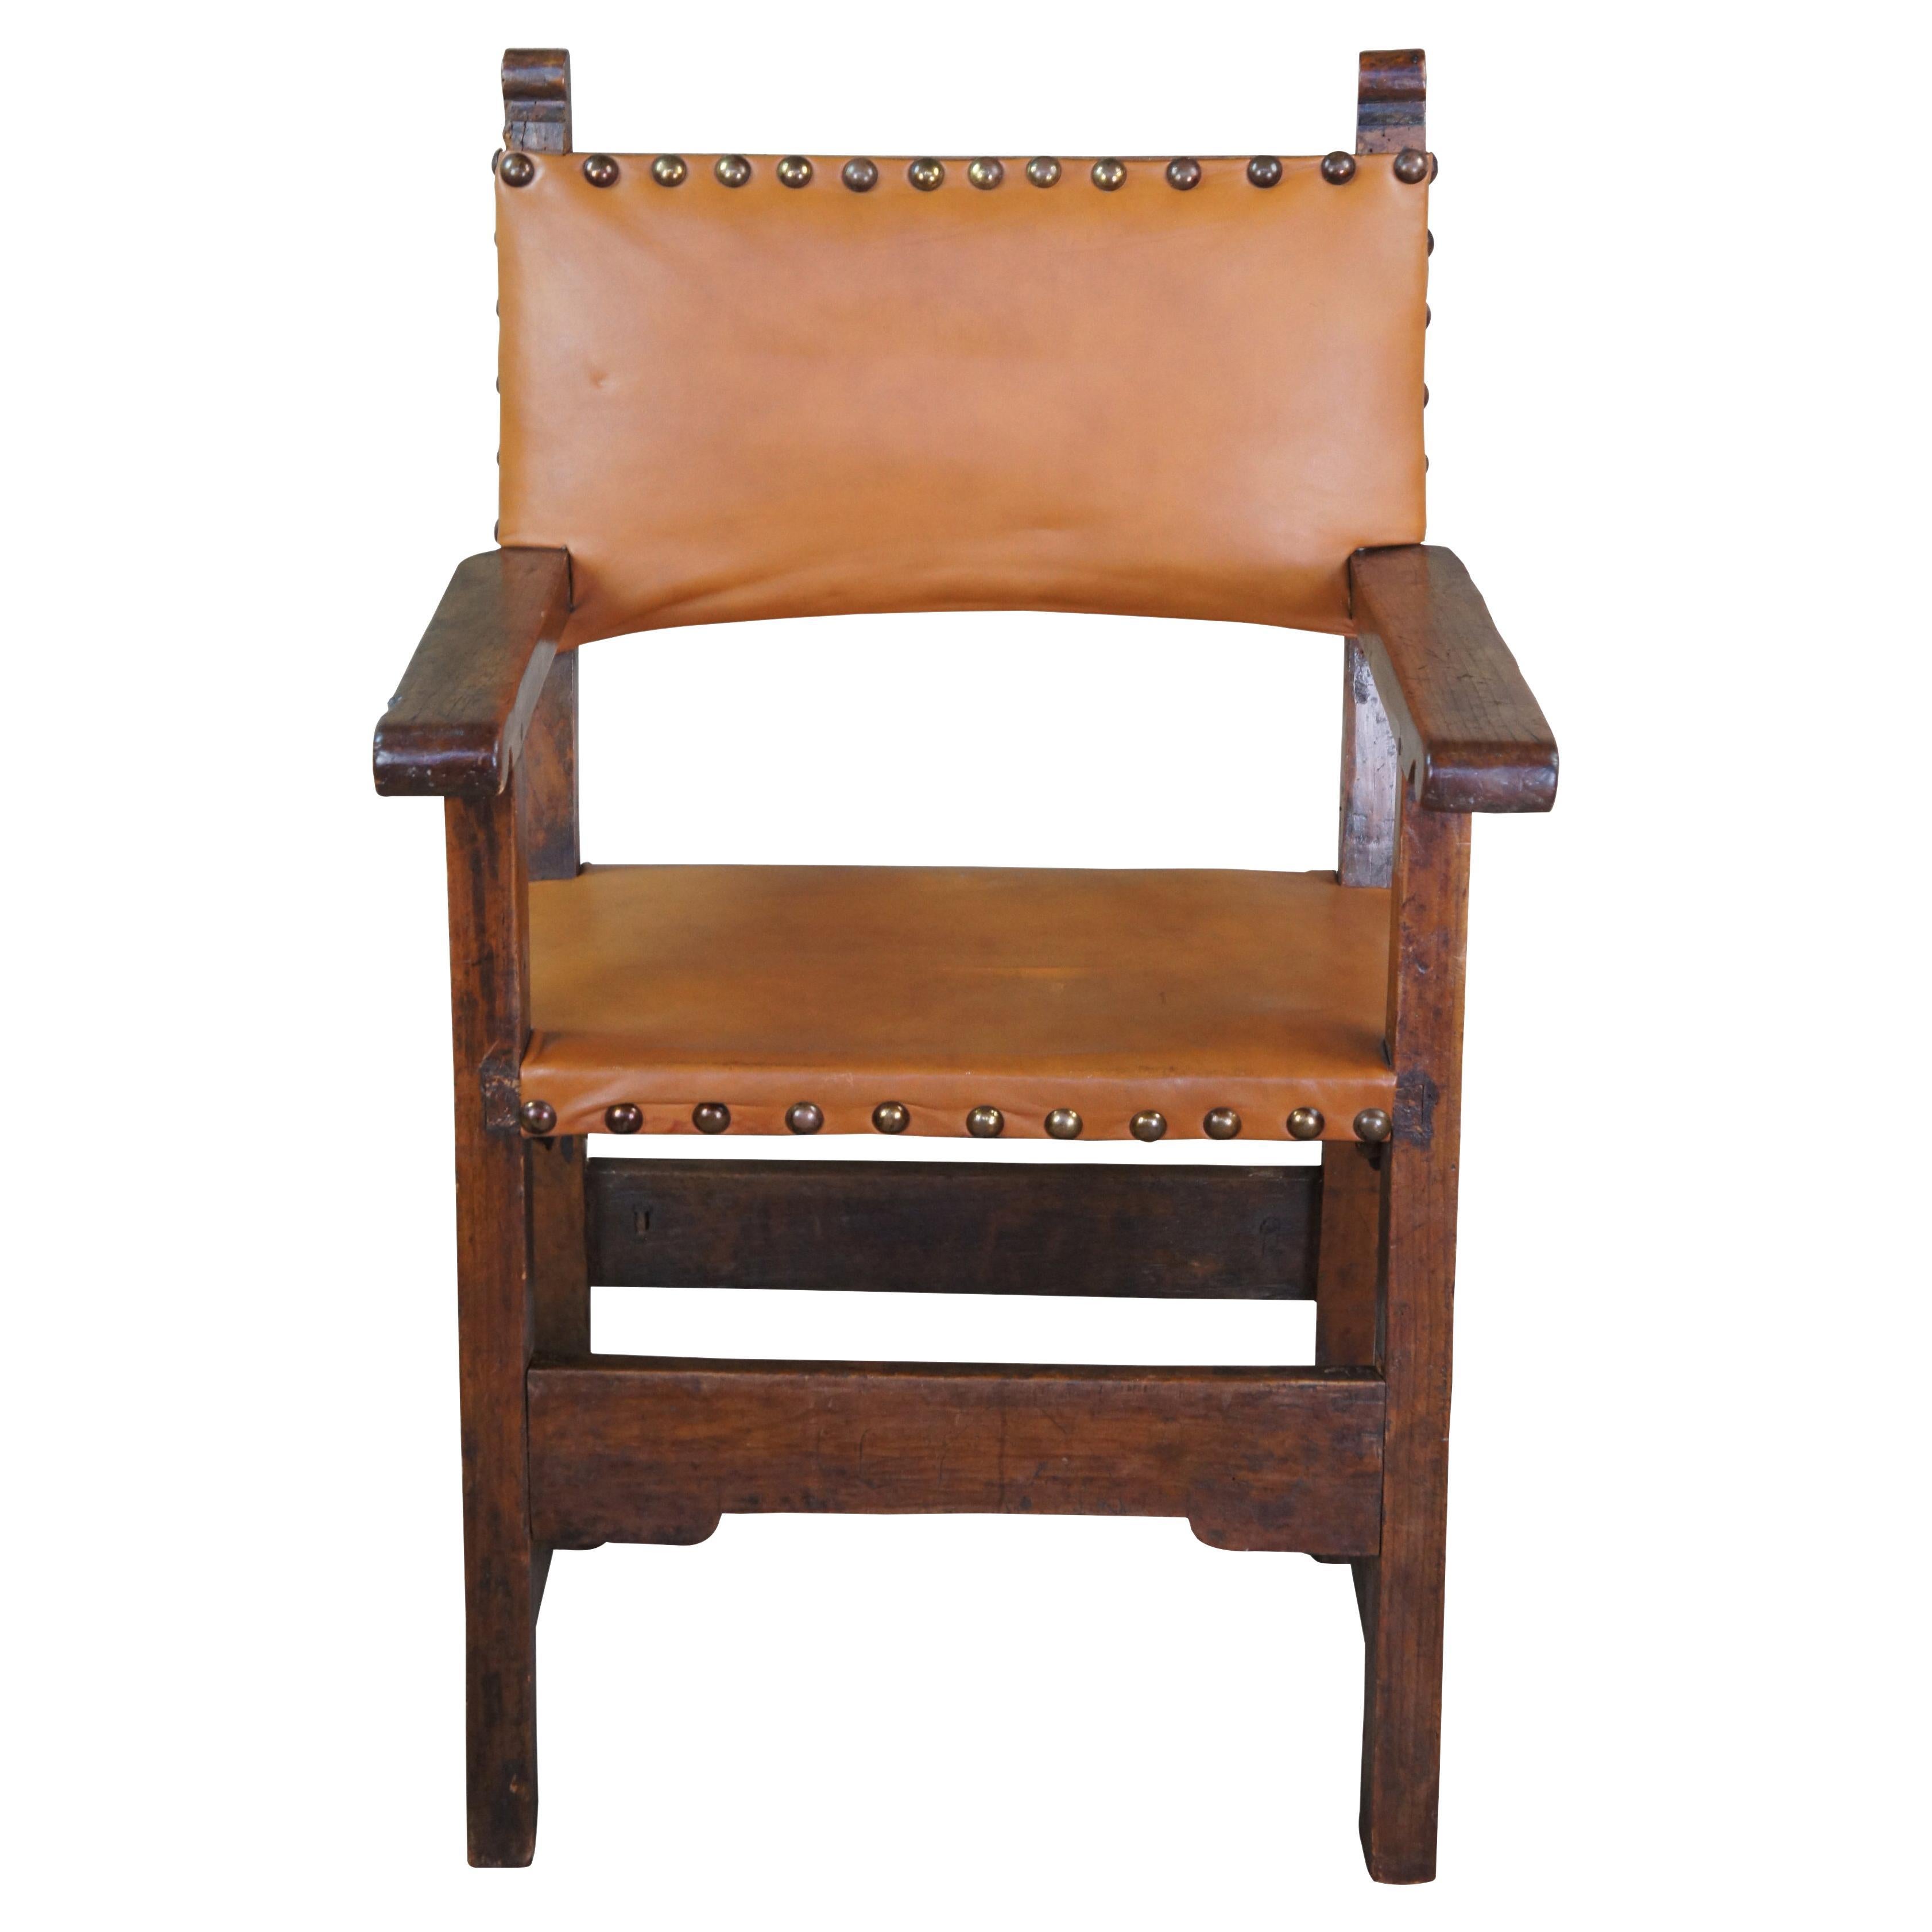 18th C. Antique Spanish Colonial Oak Leather Nailhead Friars Throne Arm Chair